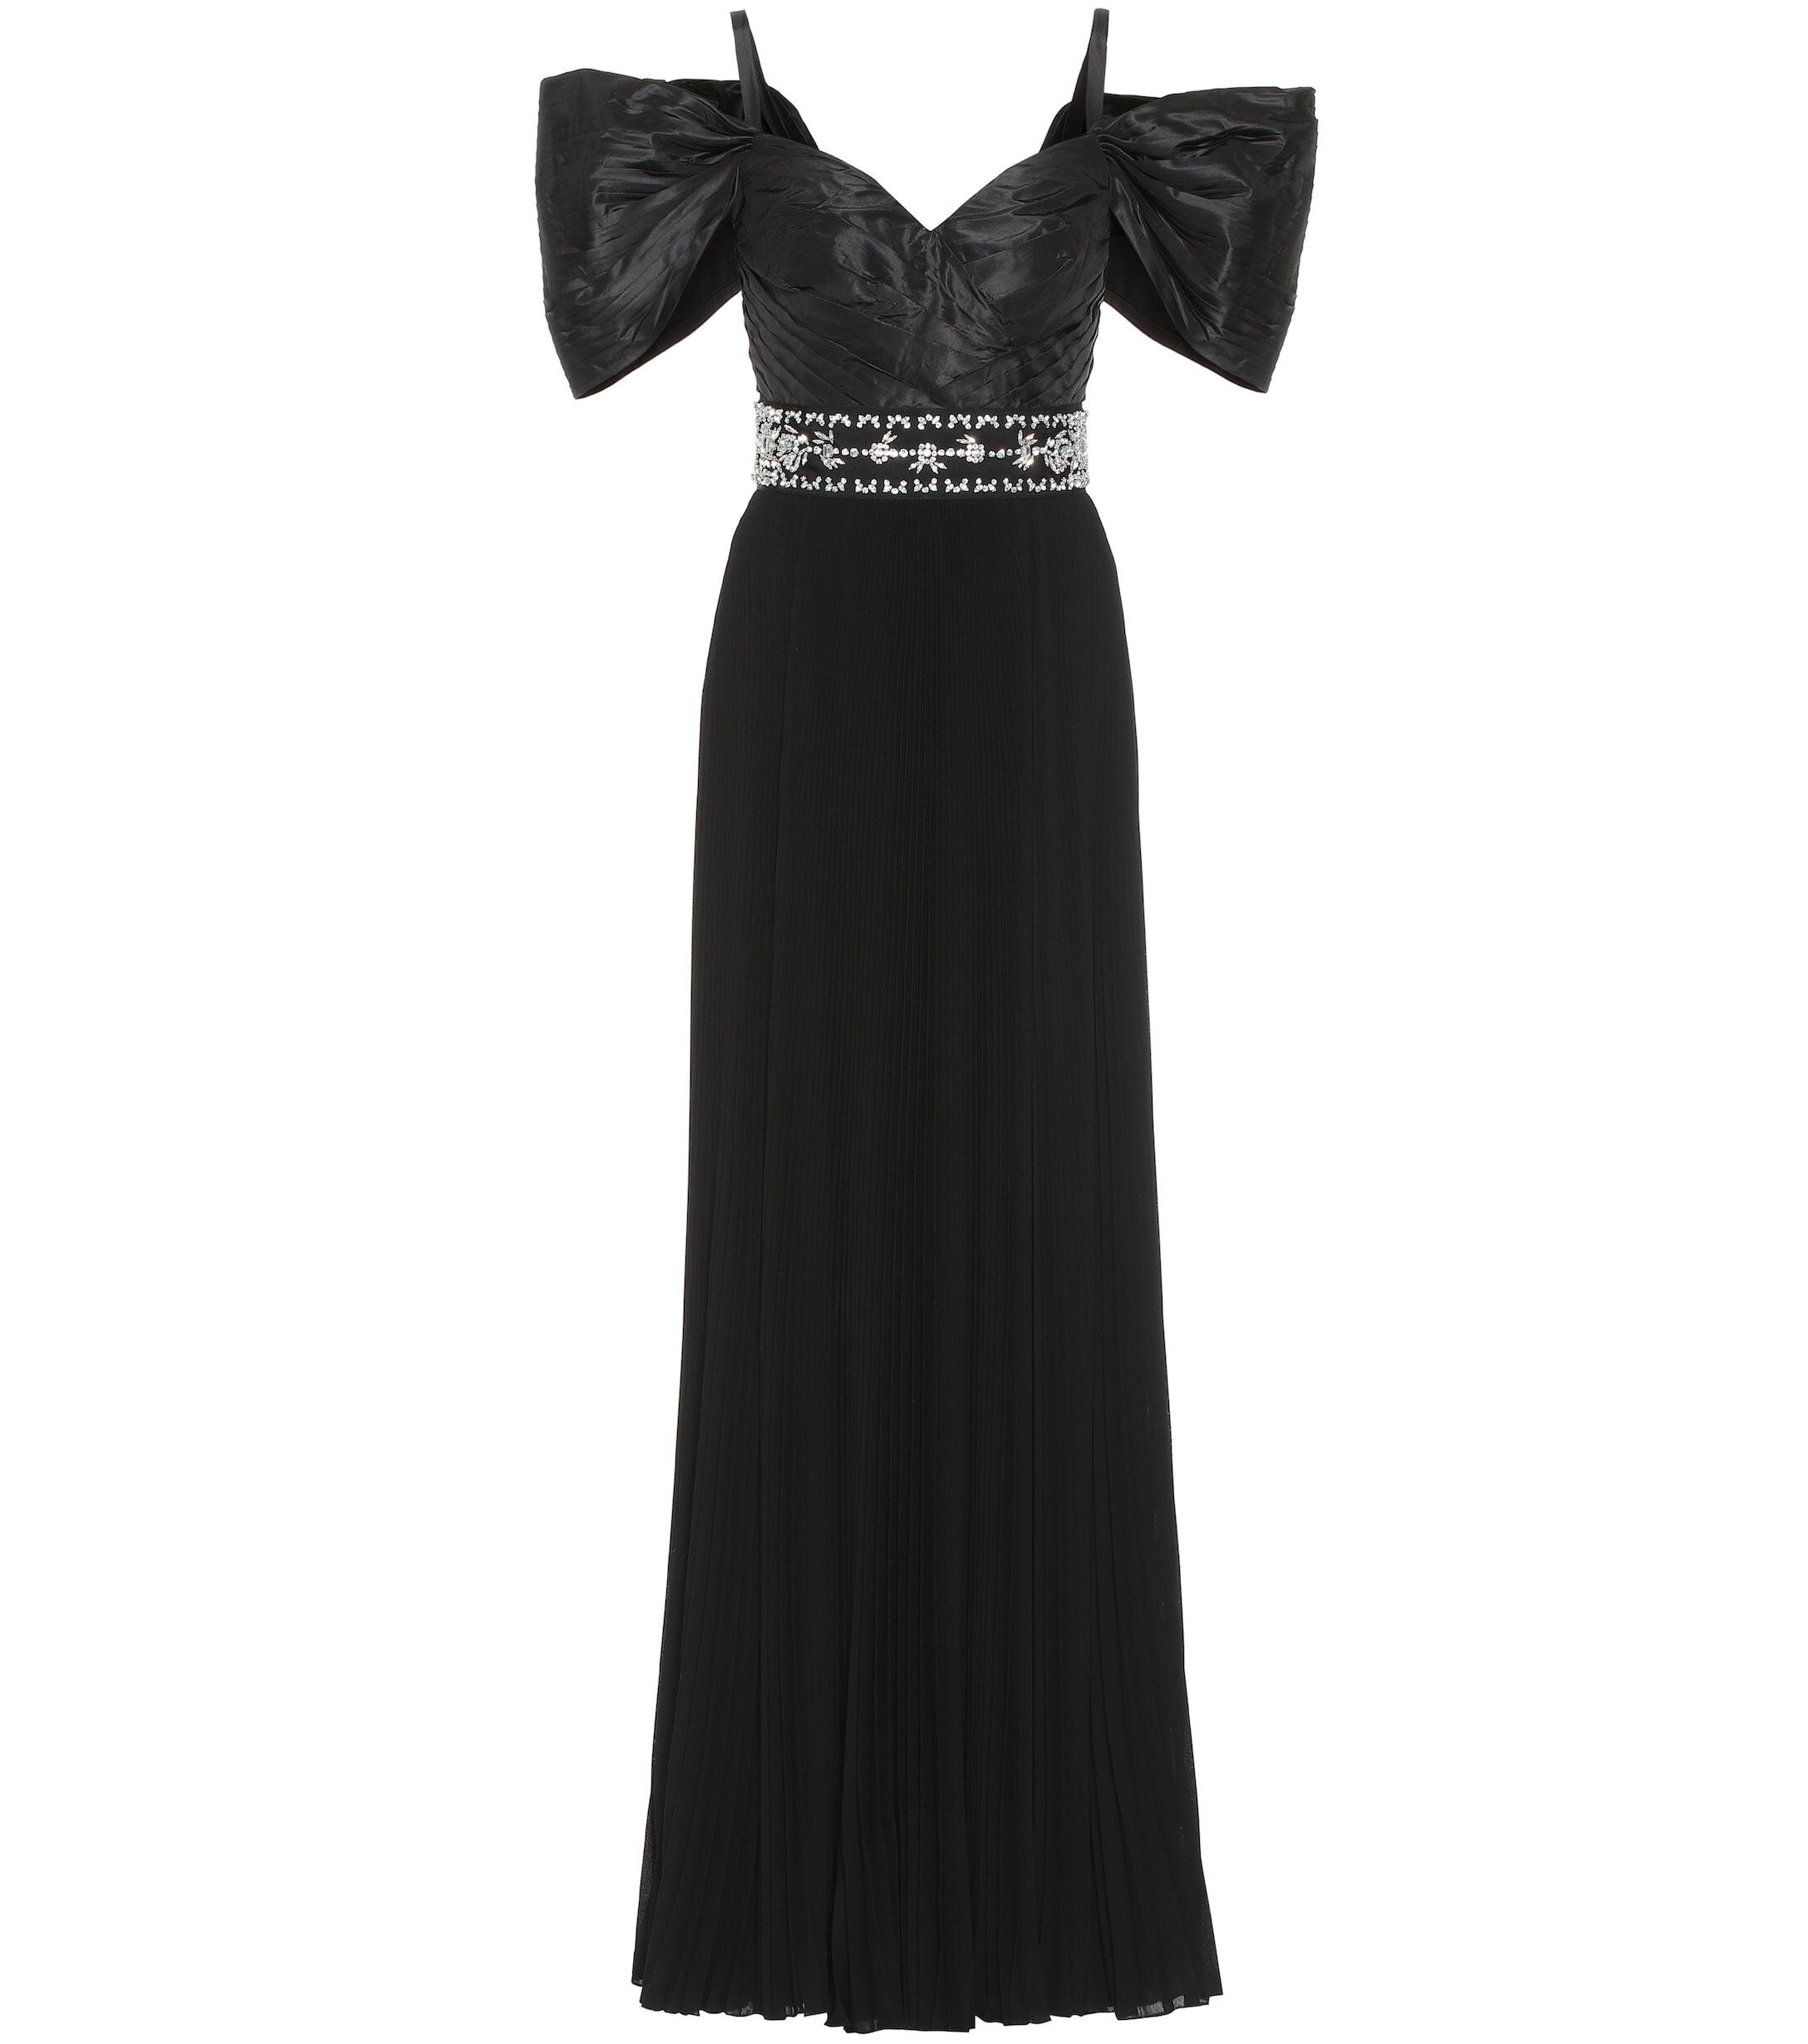 Prada Crystal-Embellished Pleated Silk-Taffeta Gown in Black.jpg